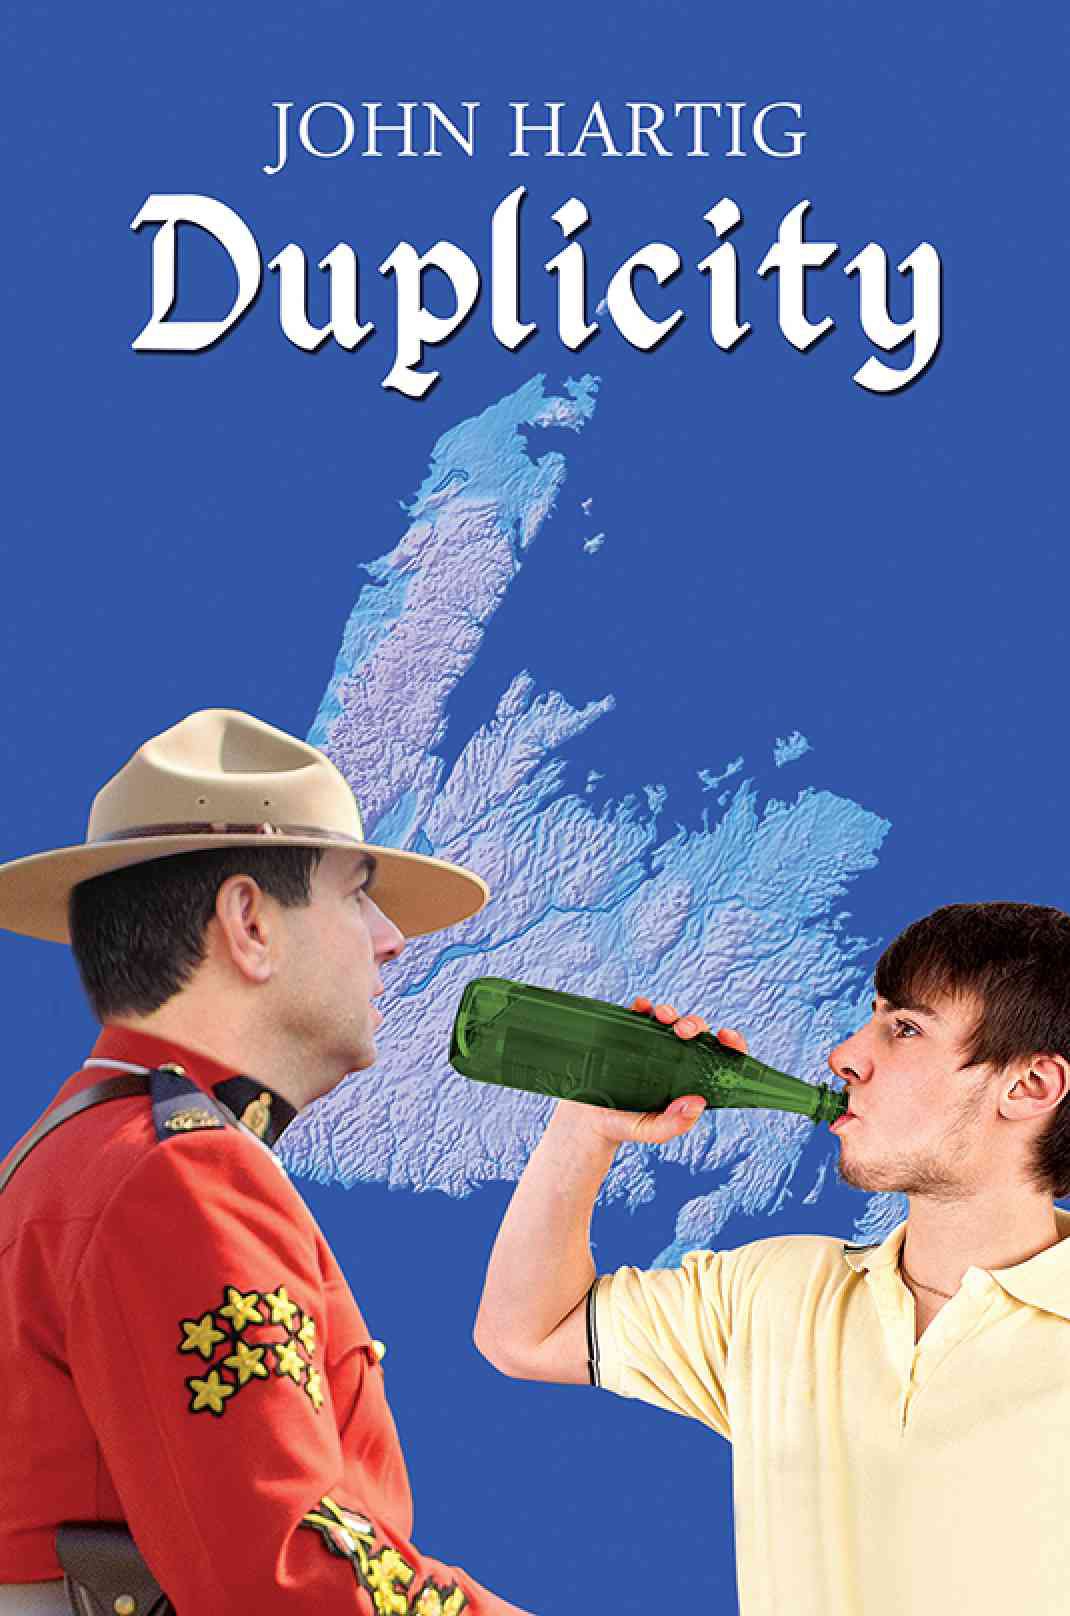 Canadian Website Features ‘Duplicity’ By John Hartig